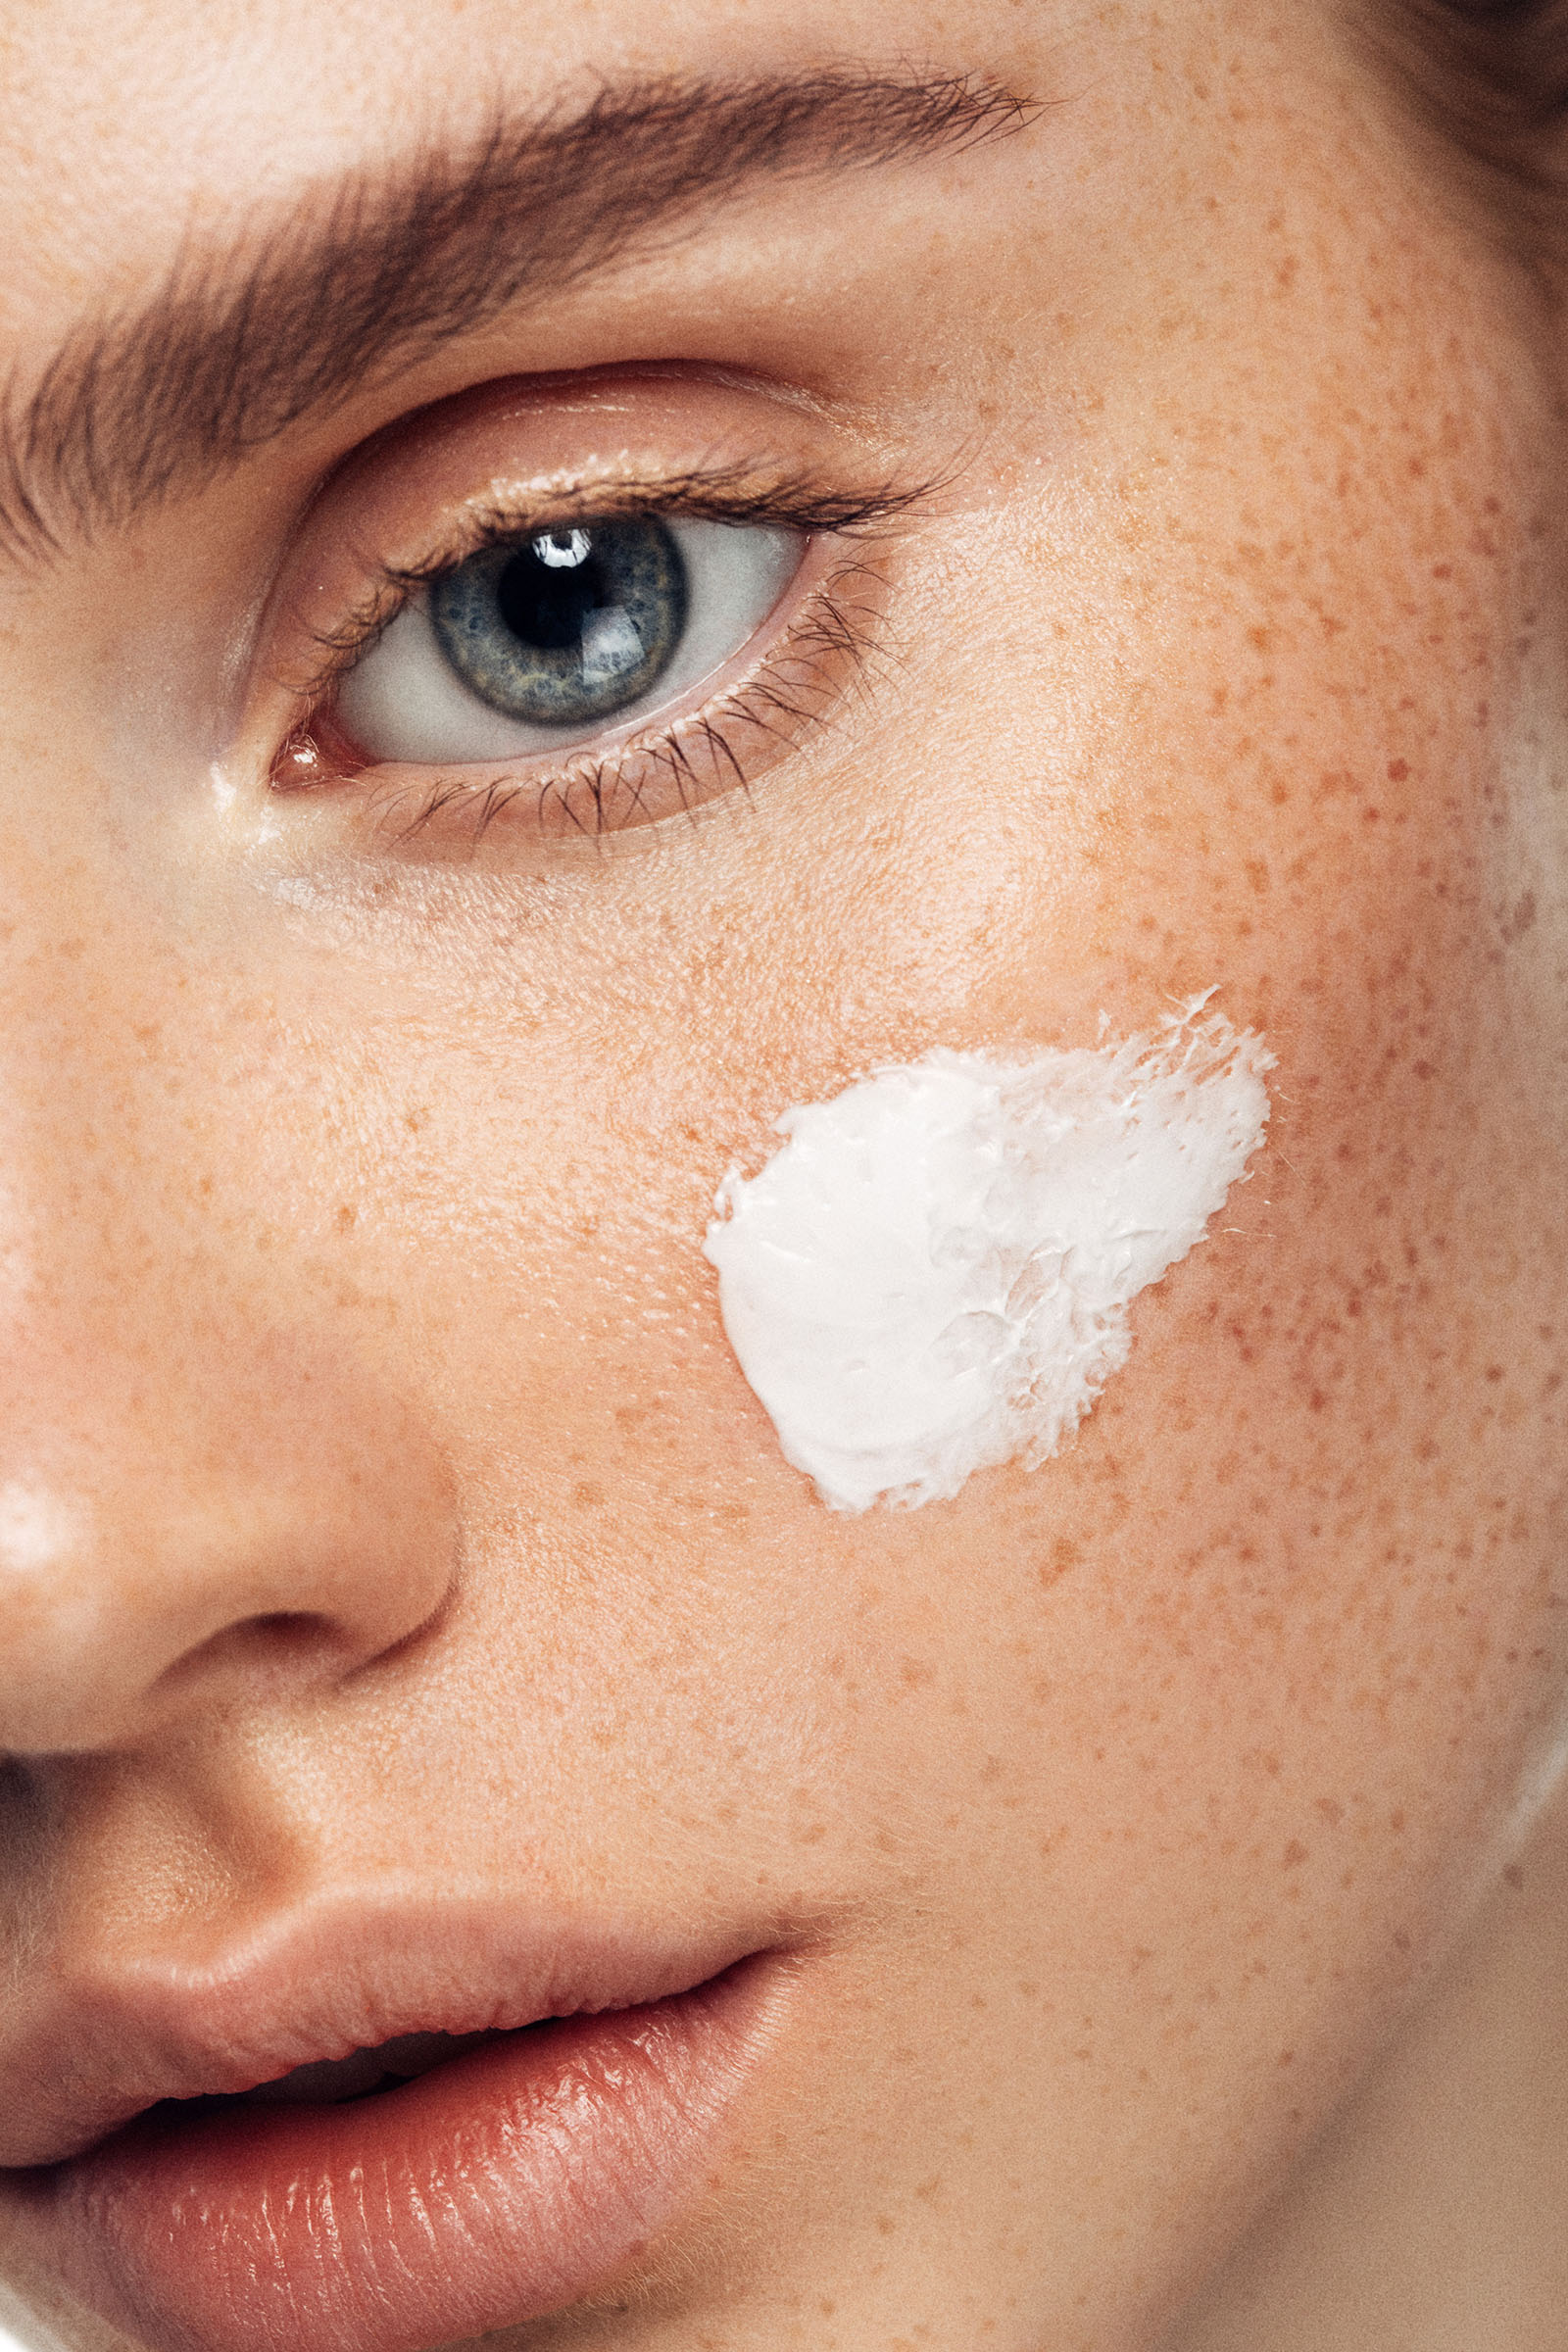 Avene Cicalfate Cream – Pro Beauty